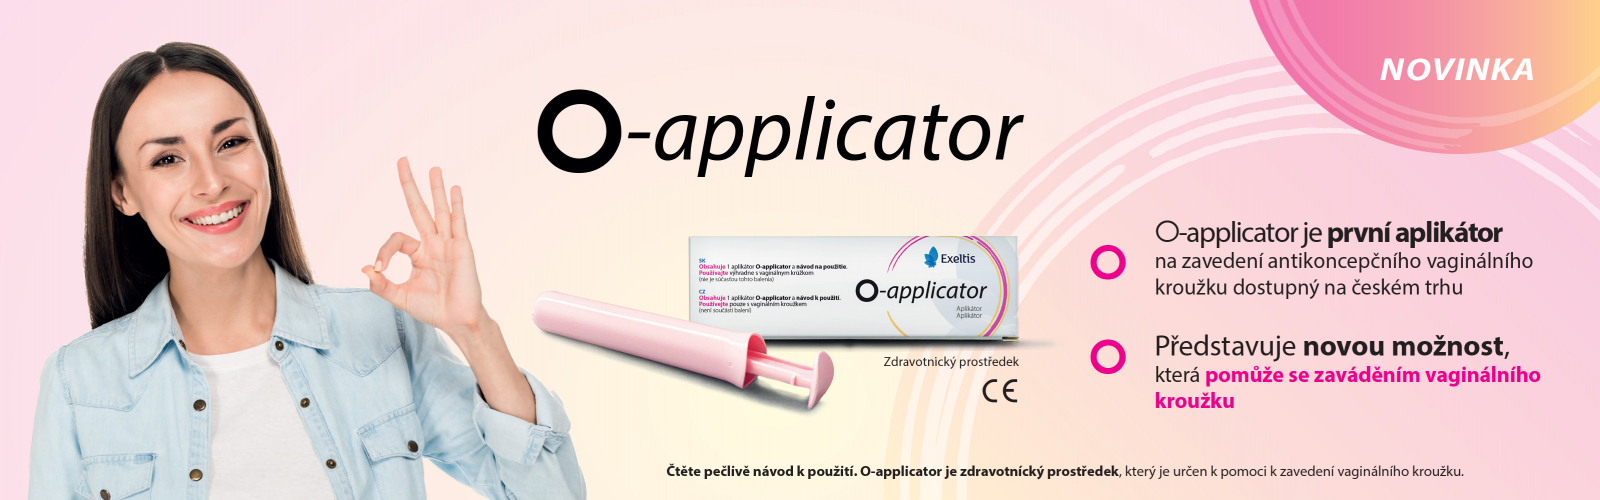 O-applicator